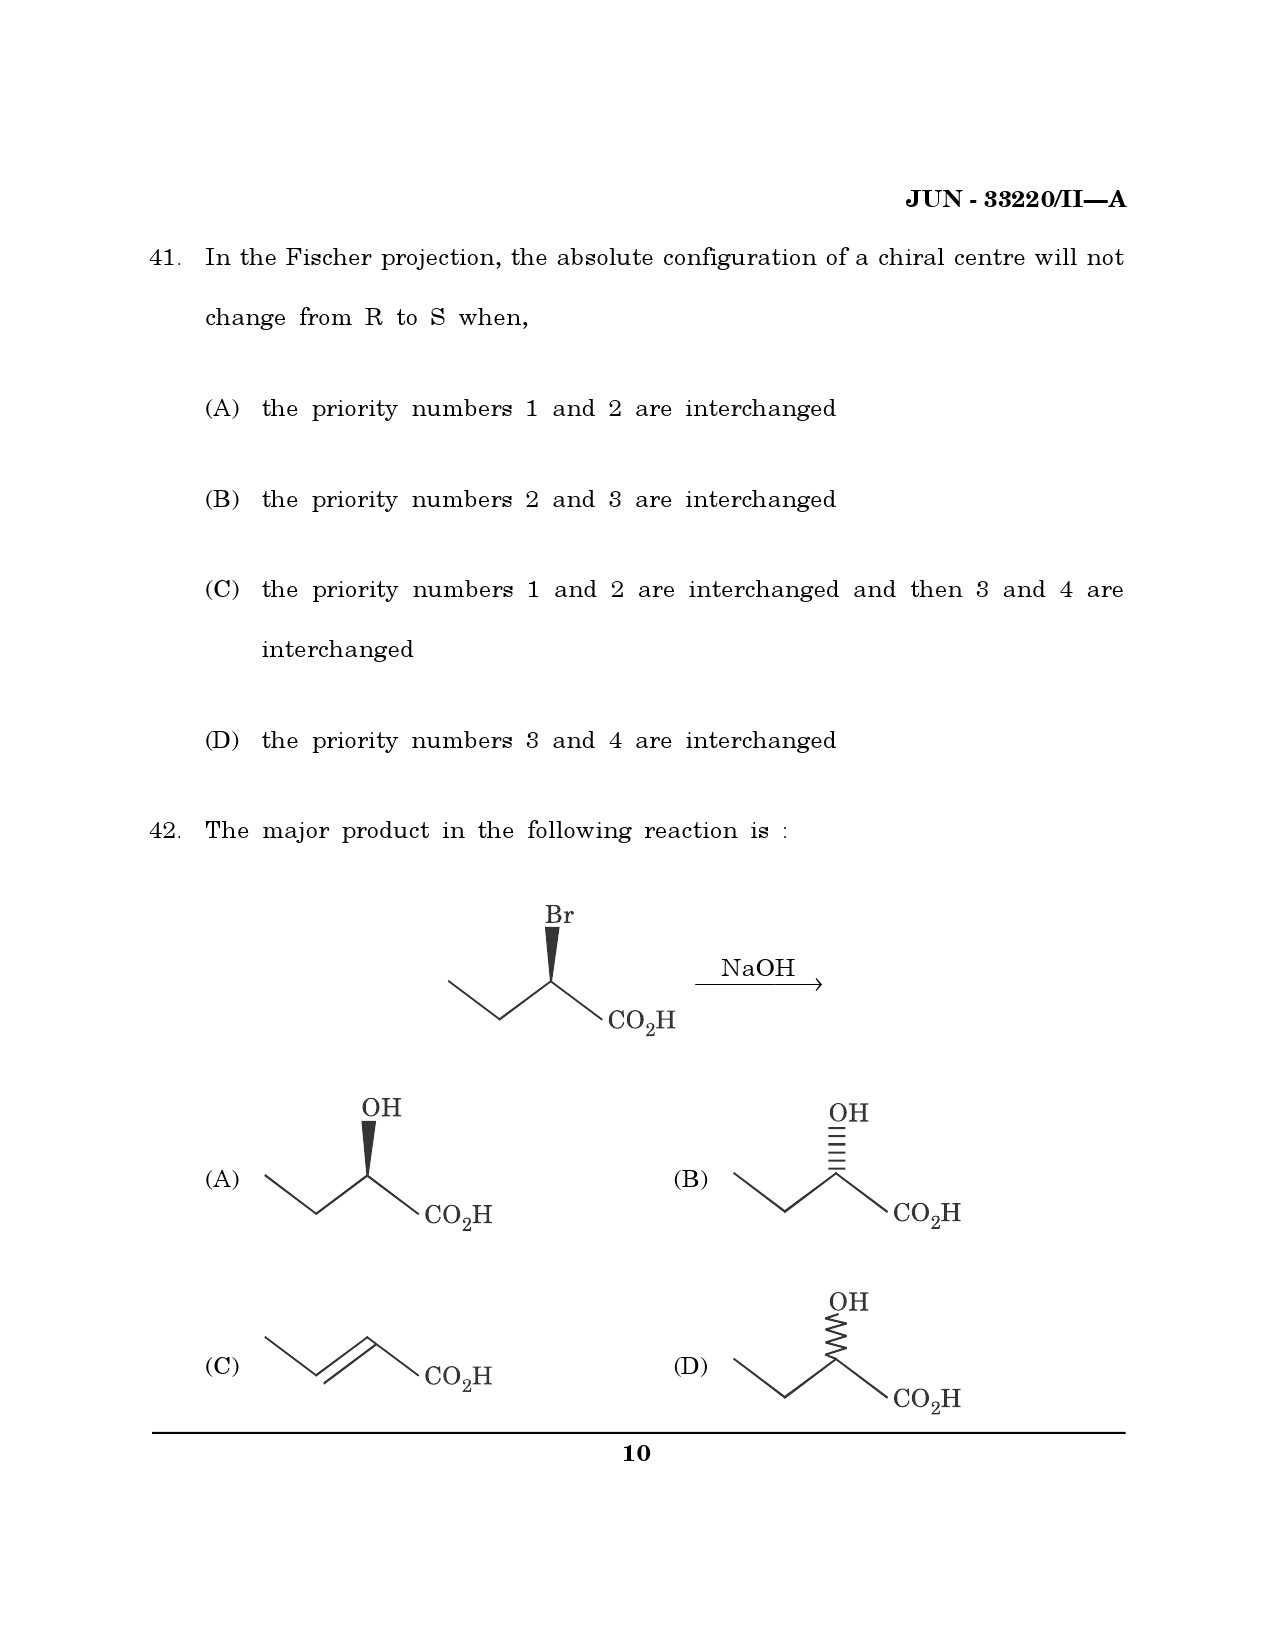 Maharashtra SET Chemical Sciences Question Paper II June 2020 9